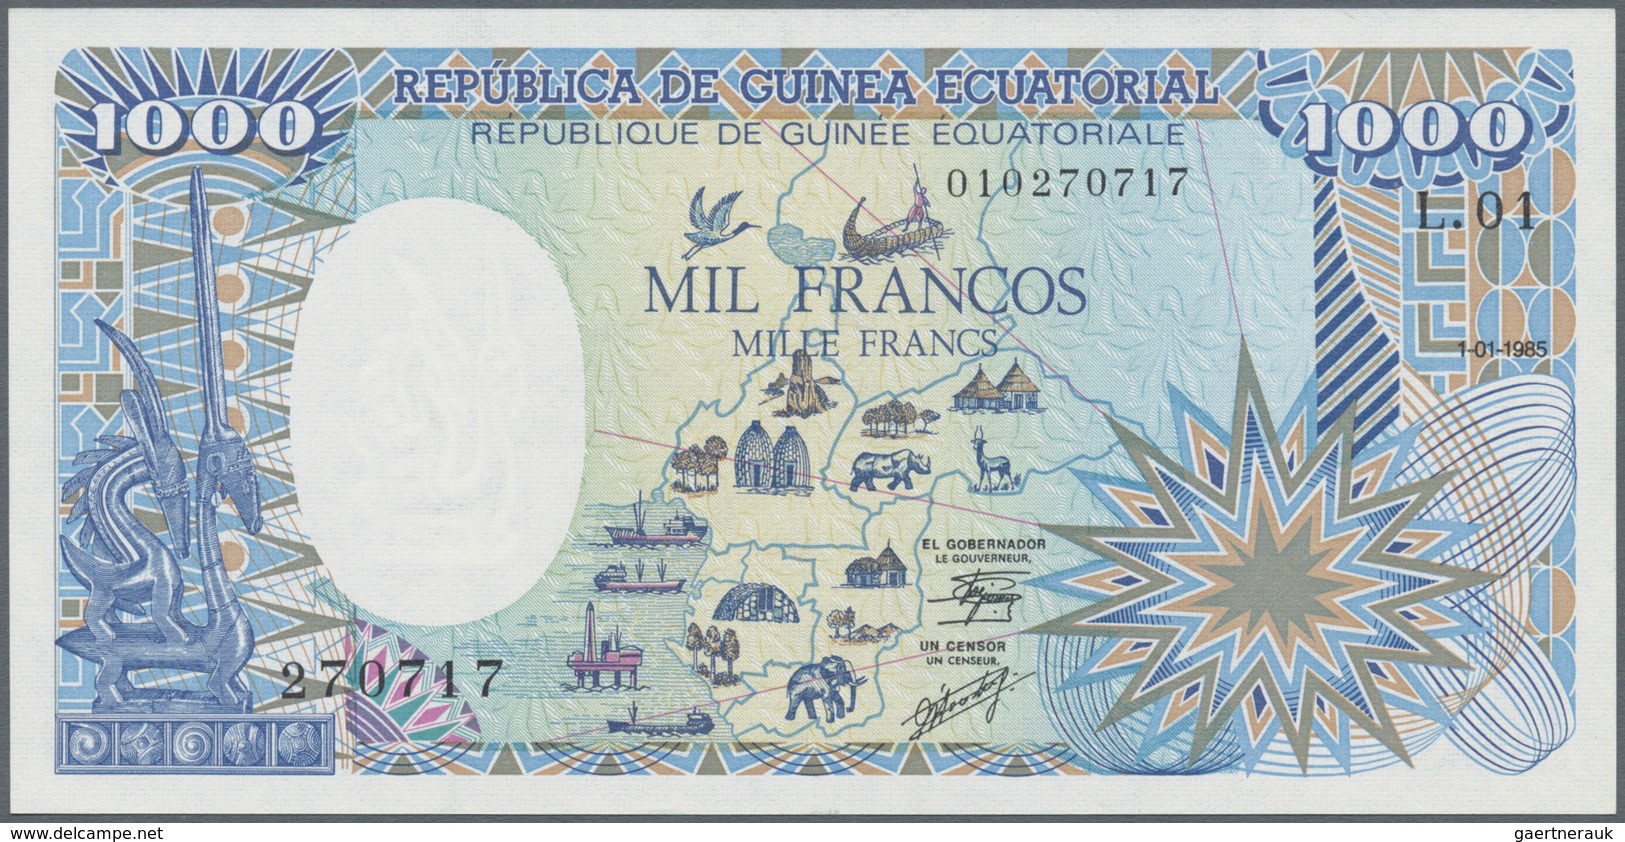 Africa / Afrika: set of 12 banknotes containing Gabon 500 Francs 1985 P. 8, Equatorial Guinea 500 &